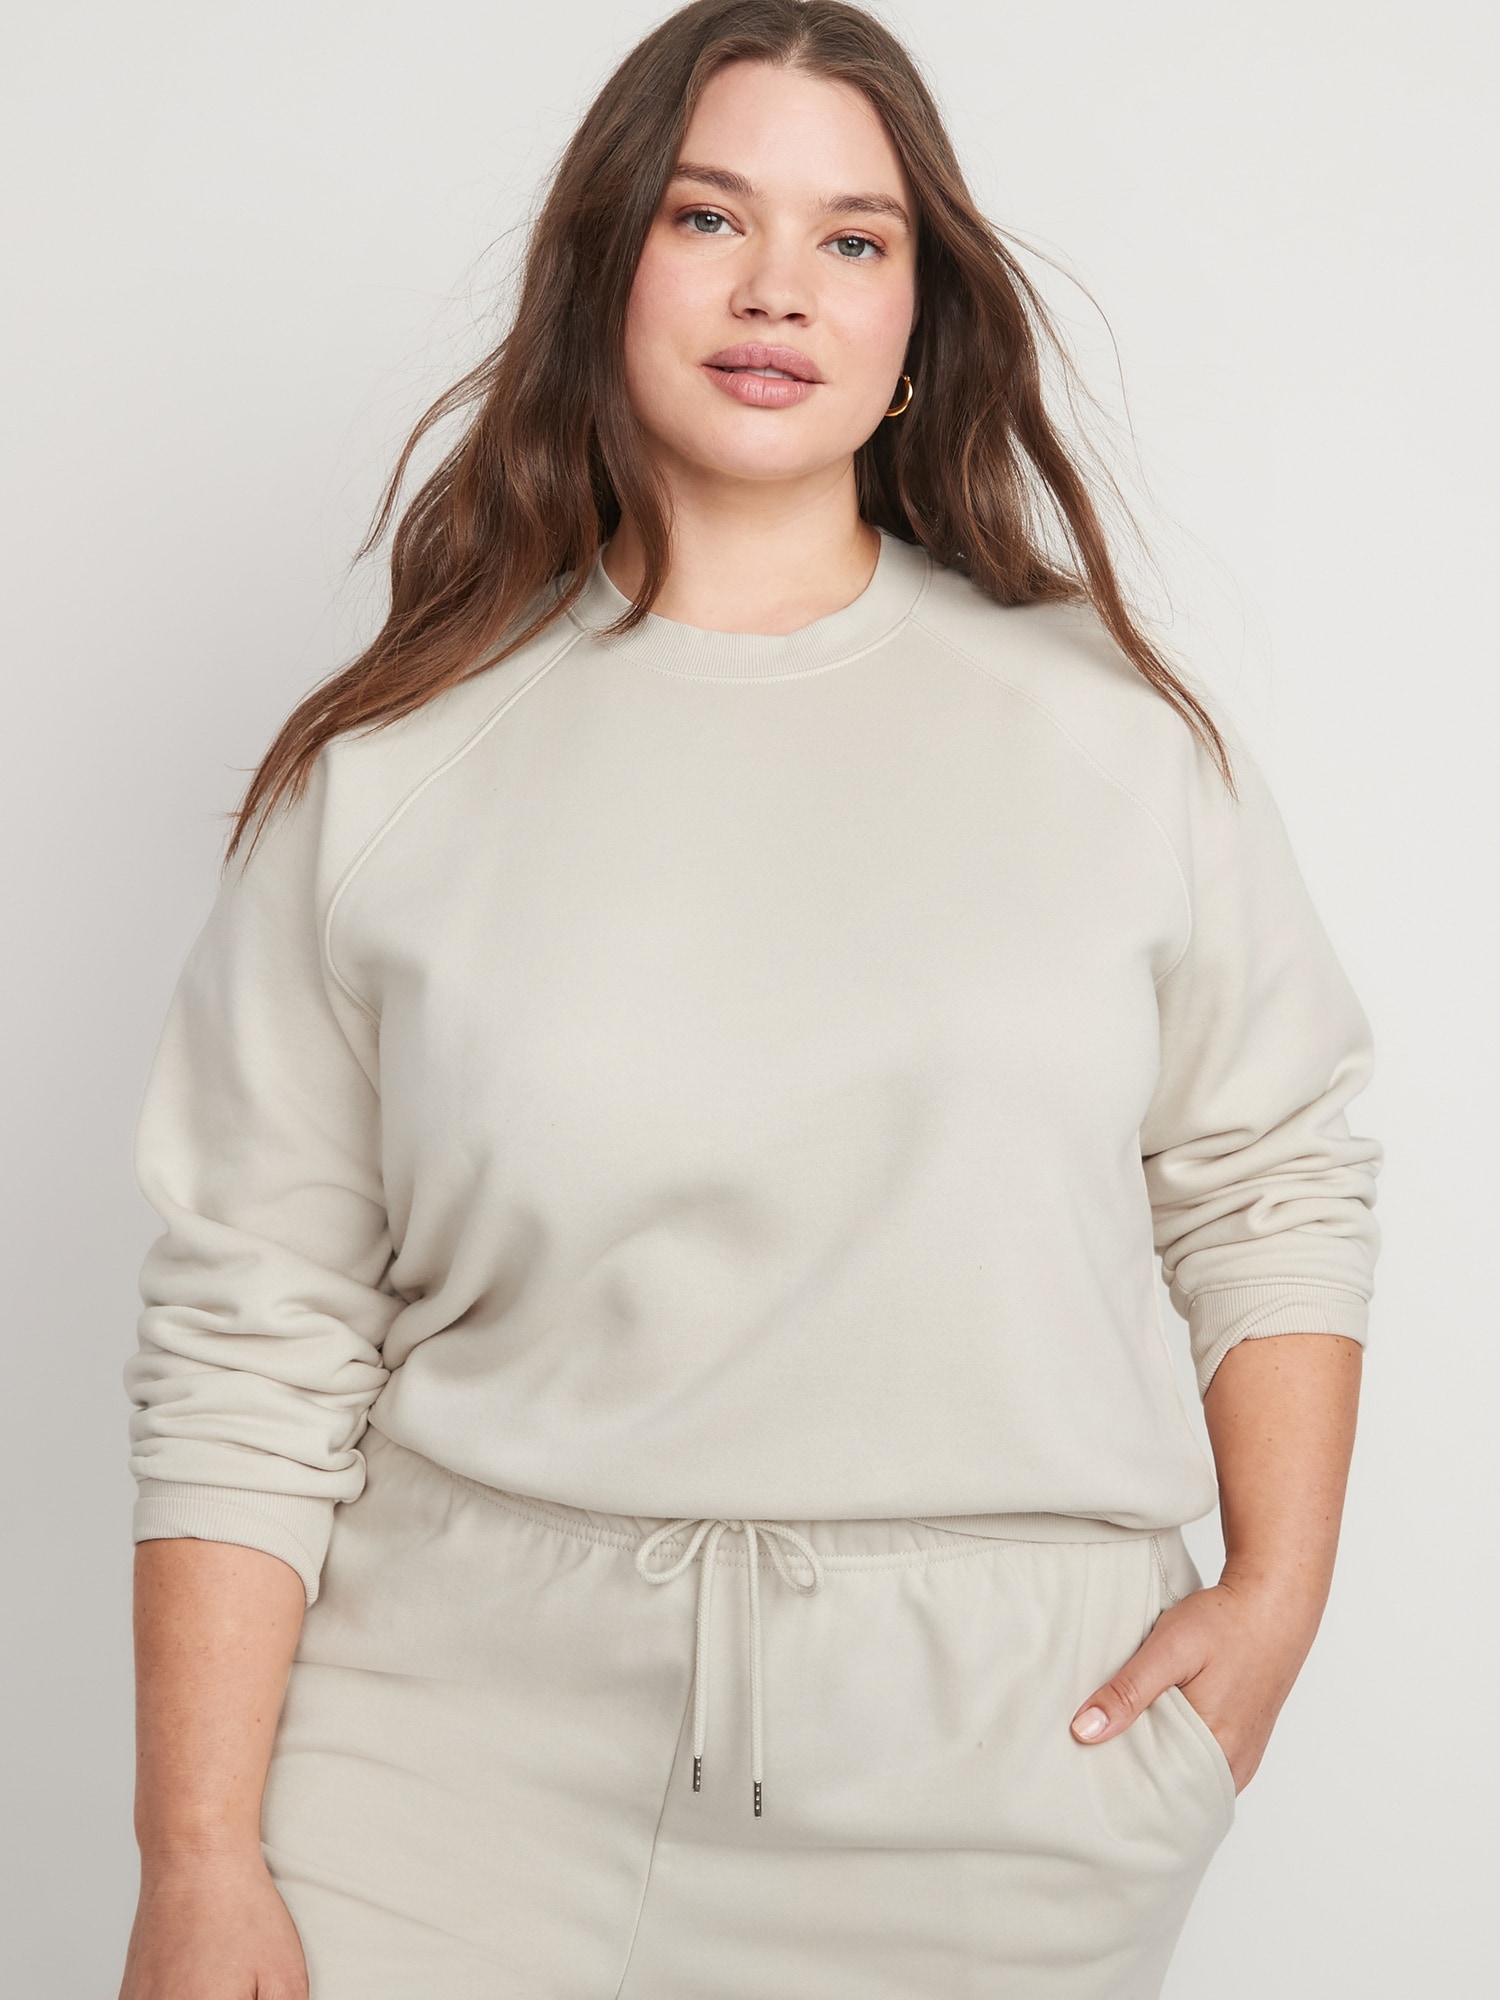 Vintage Long-Sleeve Sweatshirt for Women | Old Navy